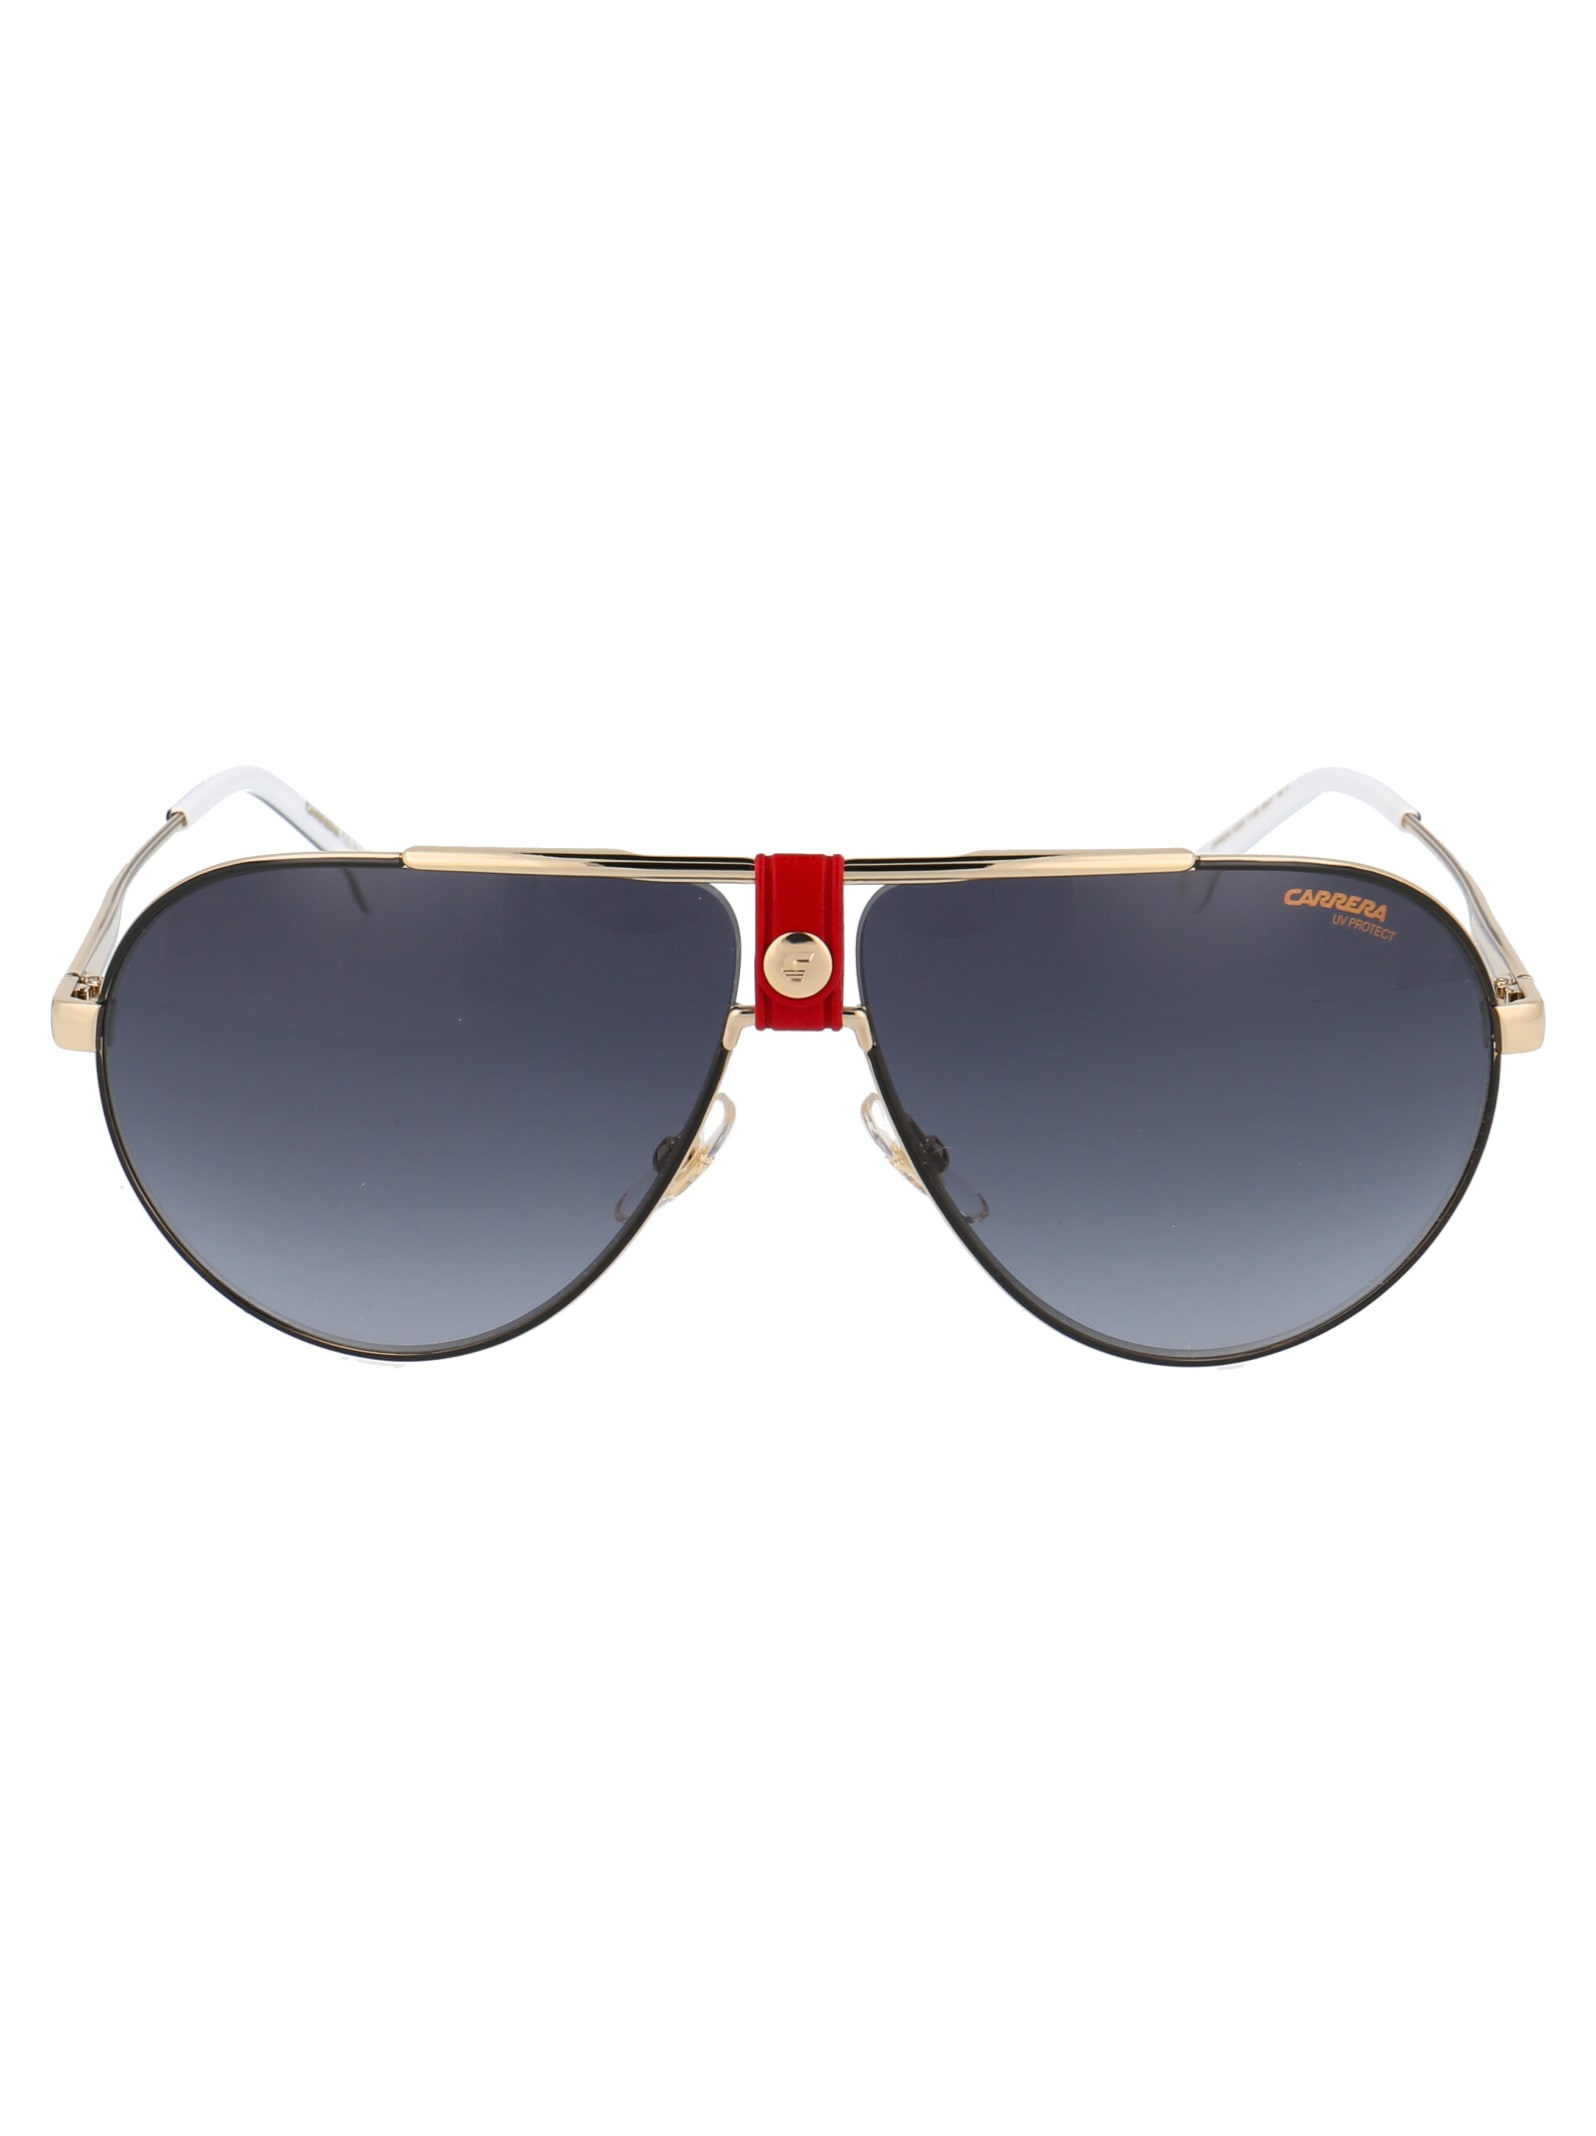 Carrera 1033/s Sunglasses